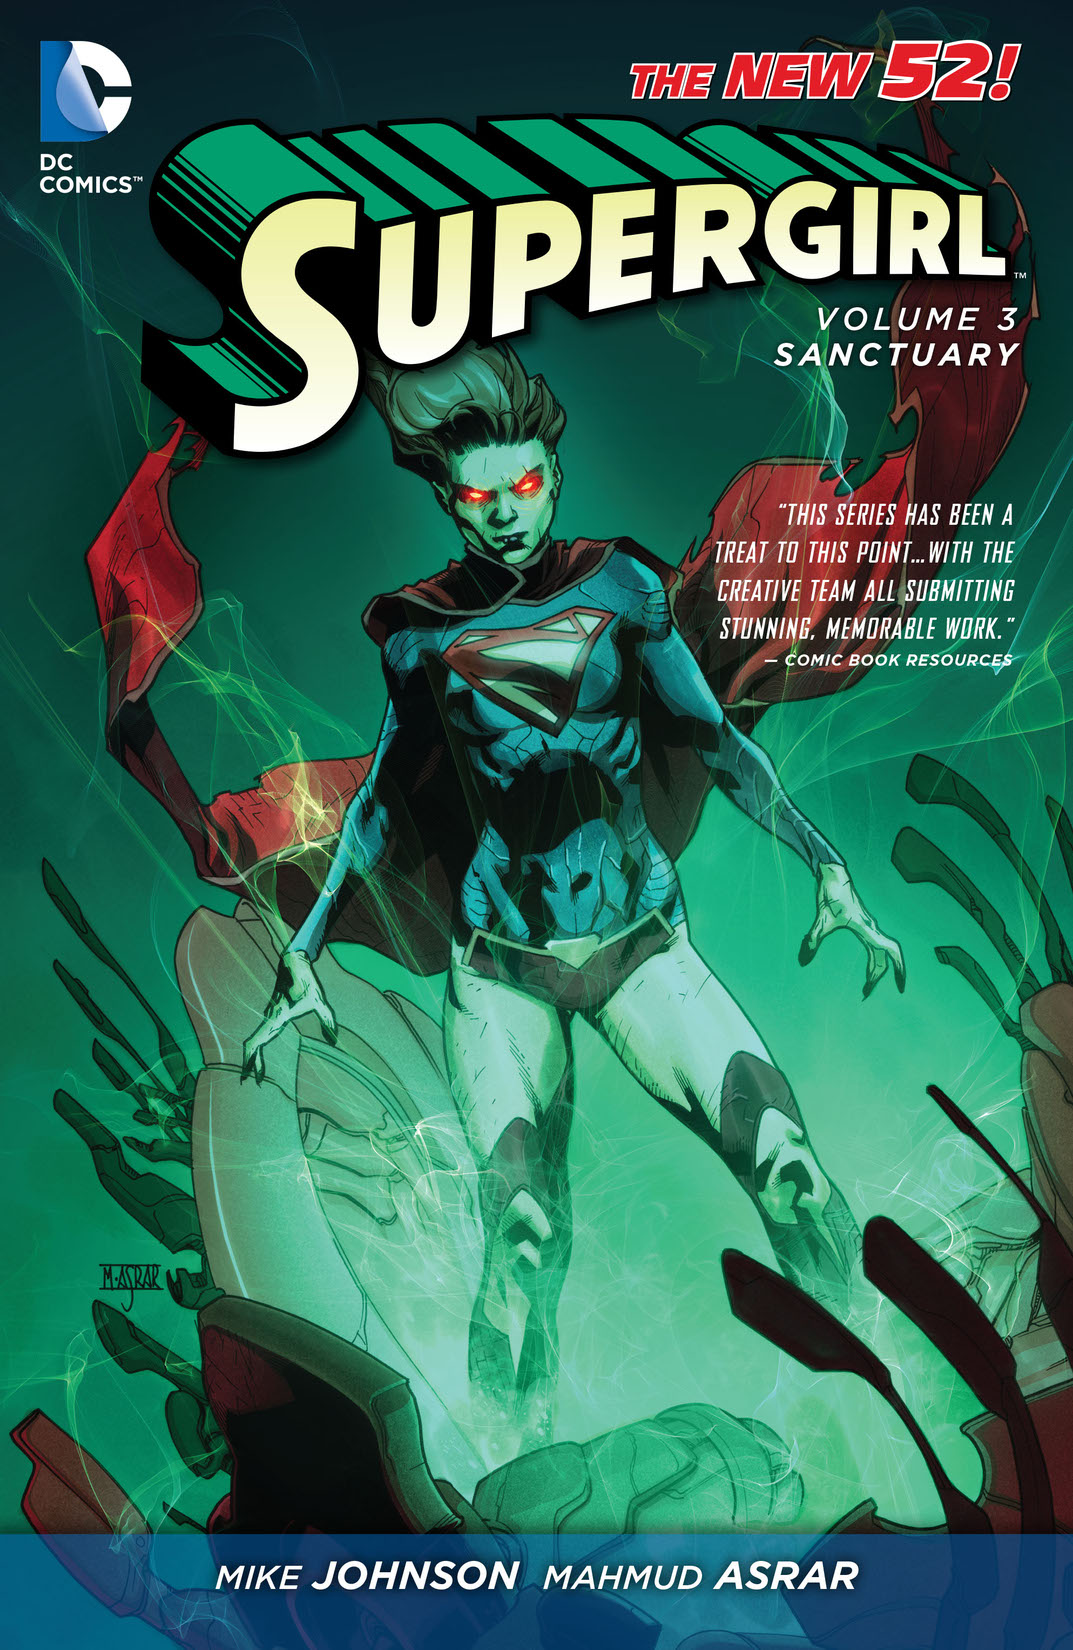 Supergirl Vol. 3: Sanctuary preview images